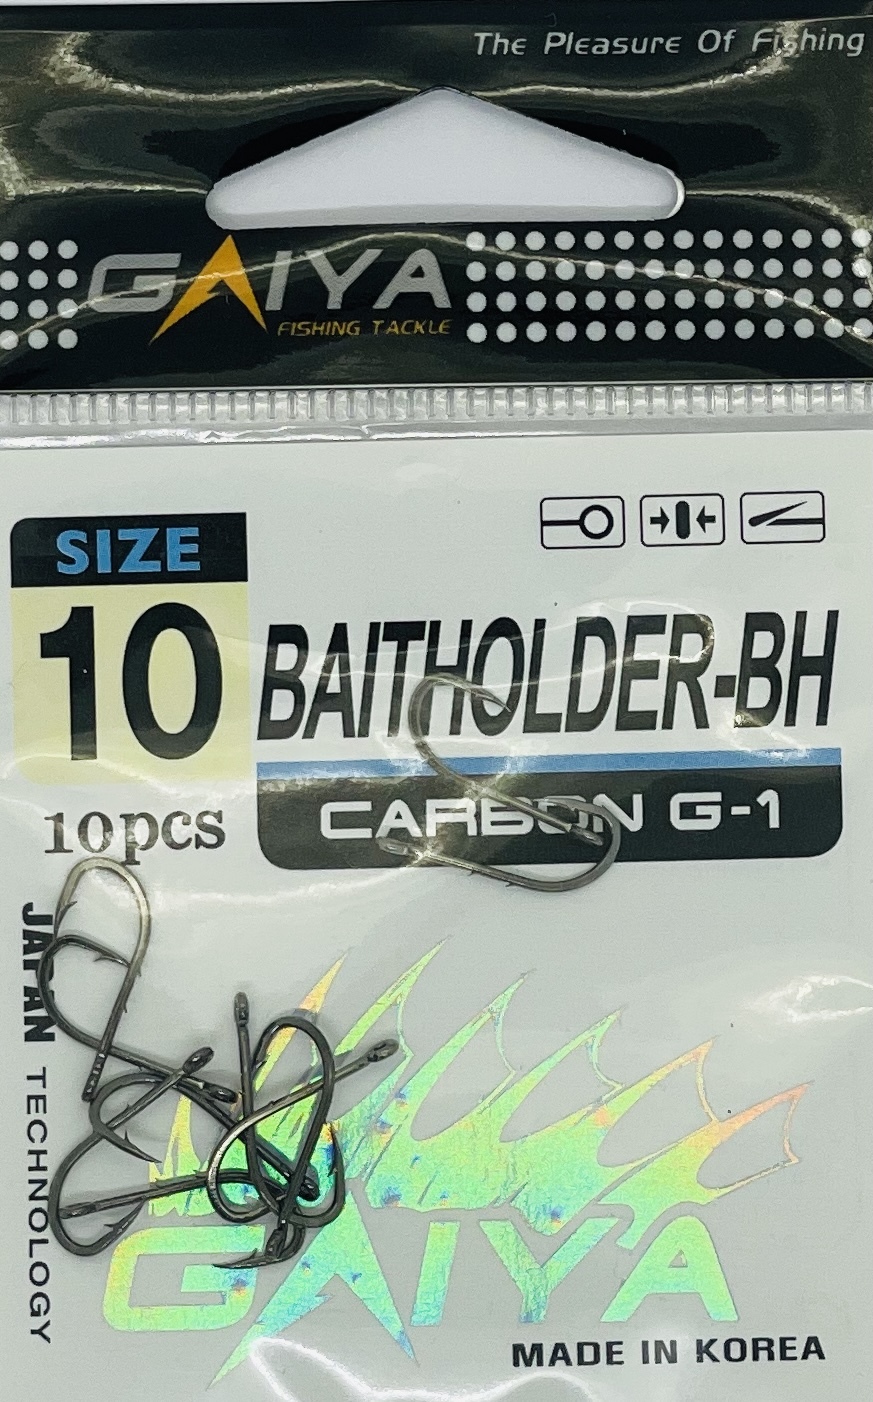 Крючки GAIYA BAITHOLDER-BH размер 10, 10 шт.